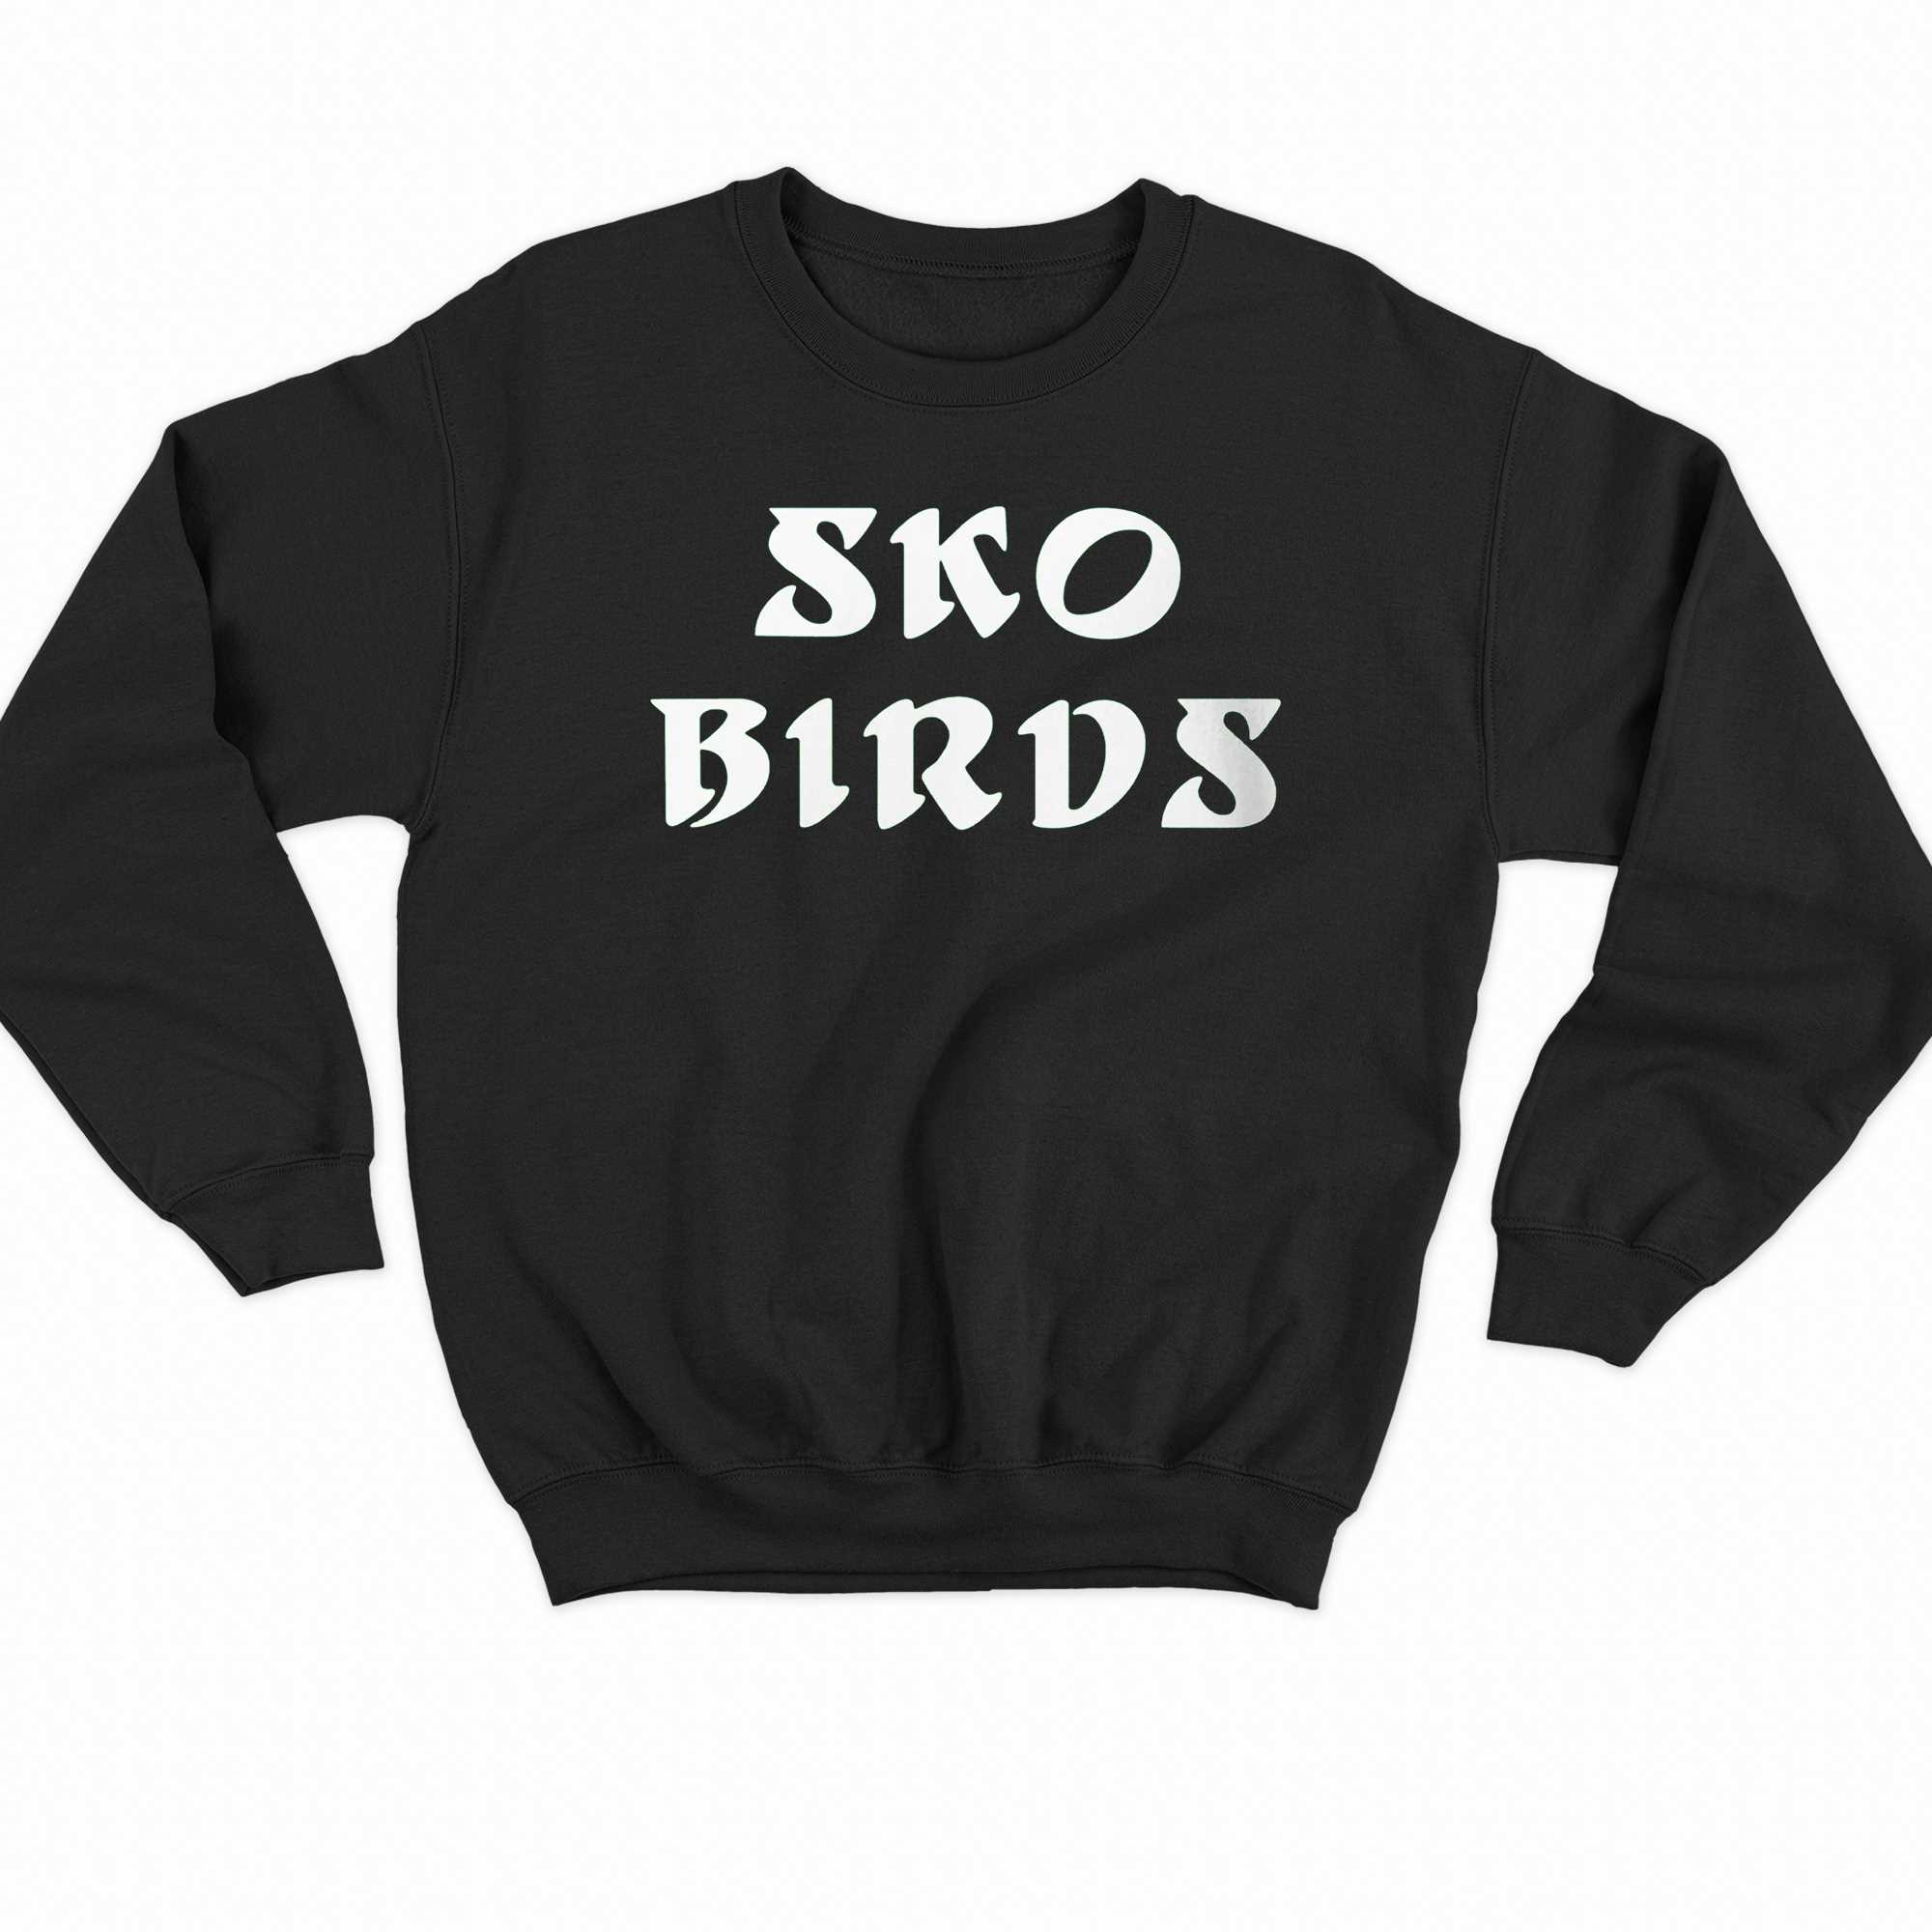 Sko Birds T-shirt 